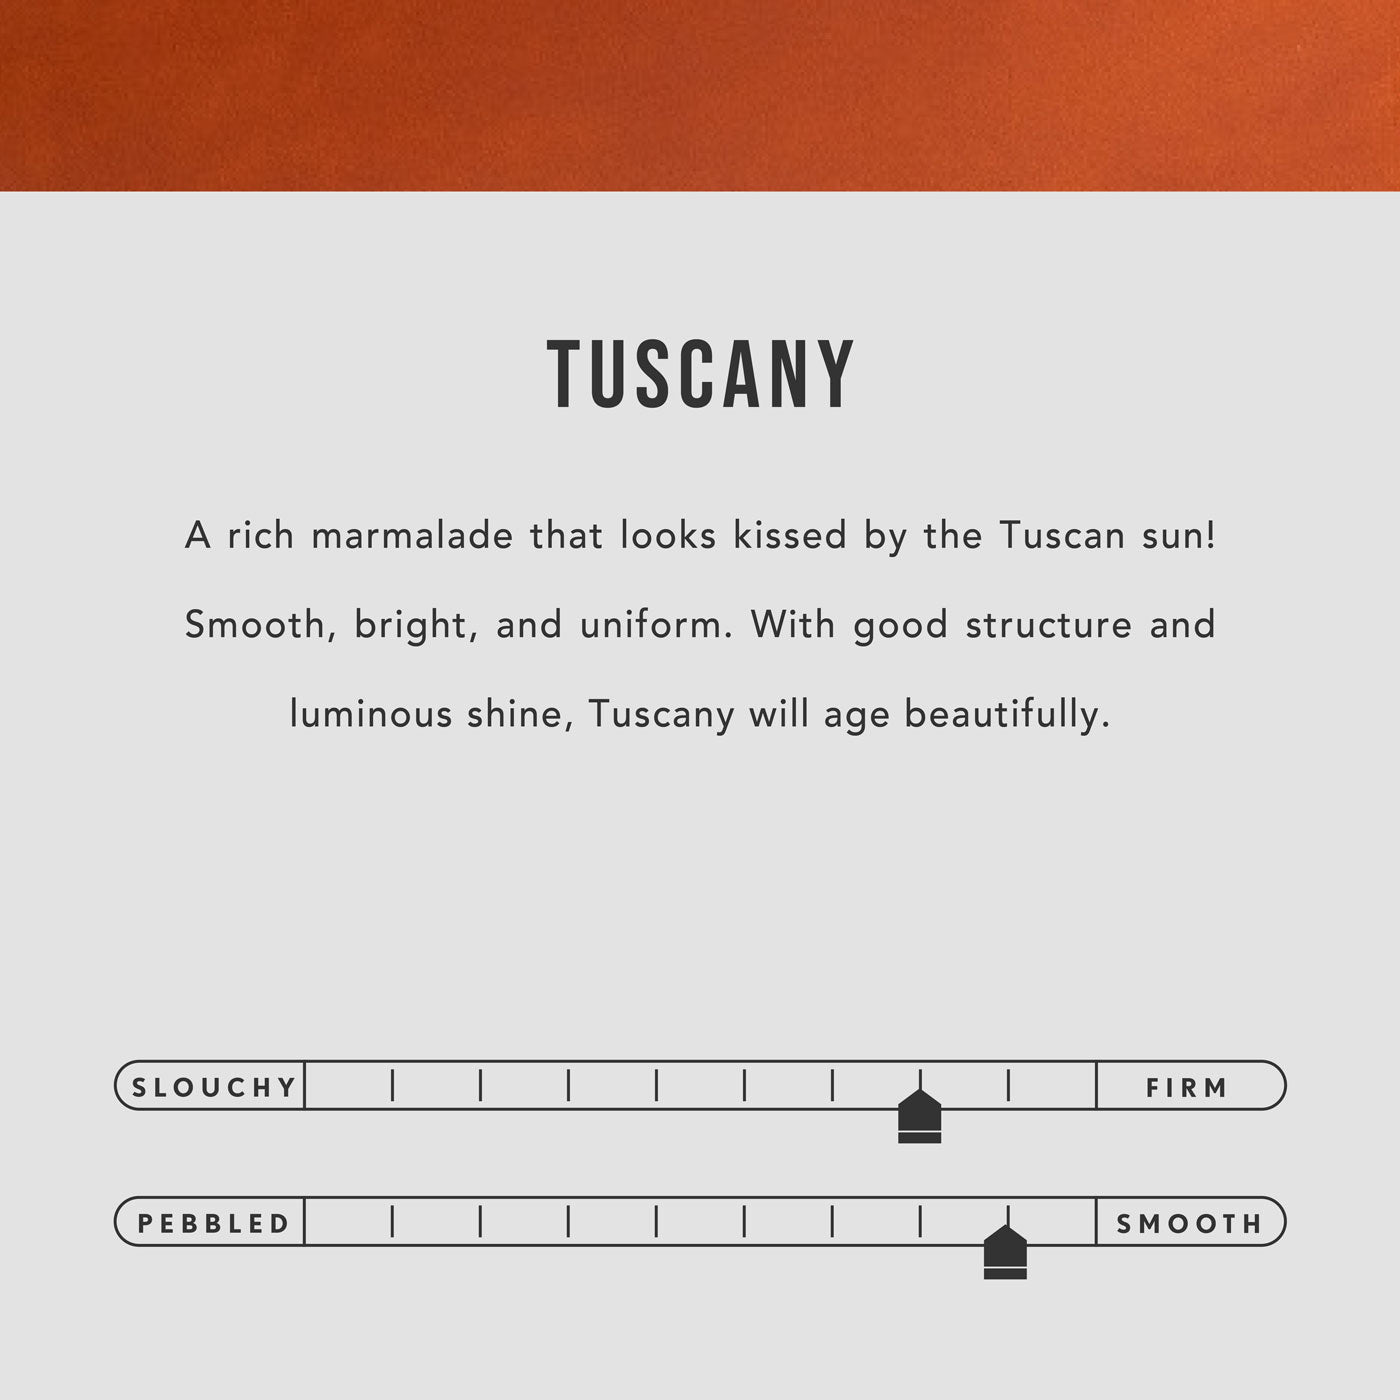 Tuscany | infographic